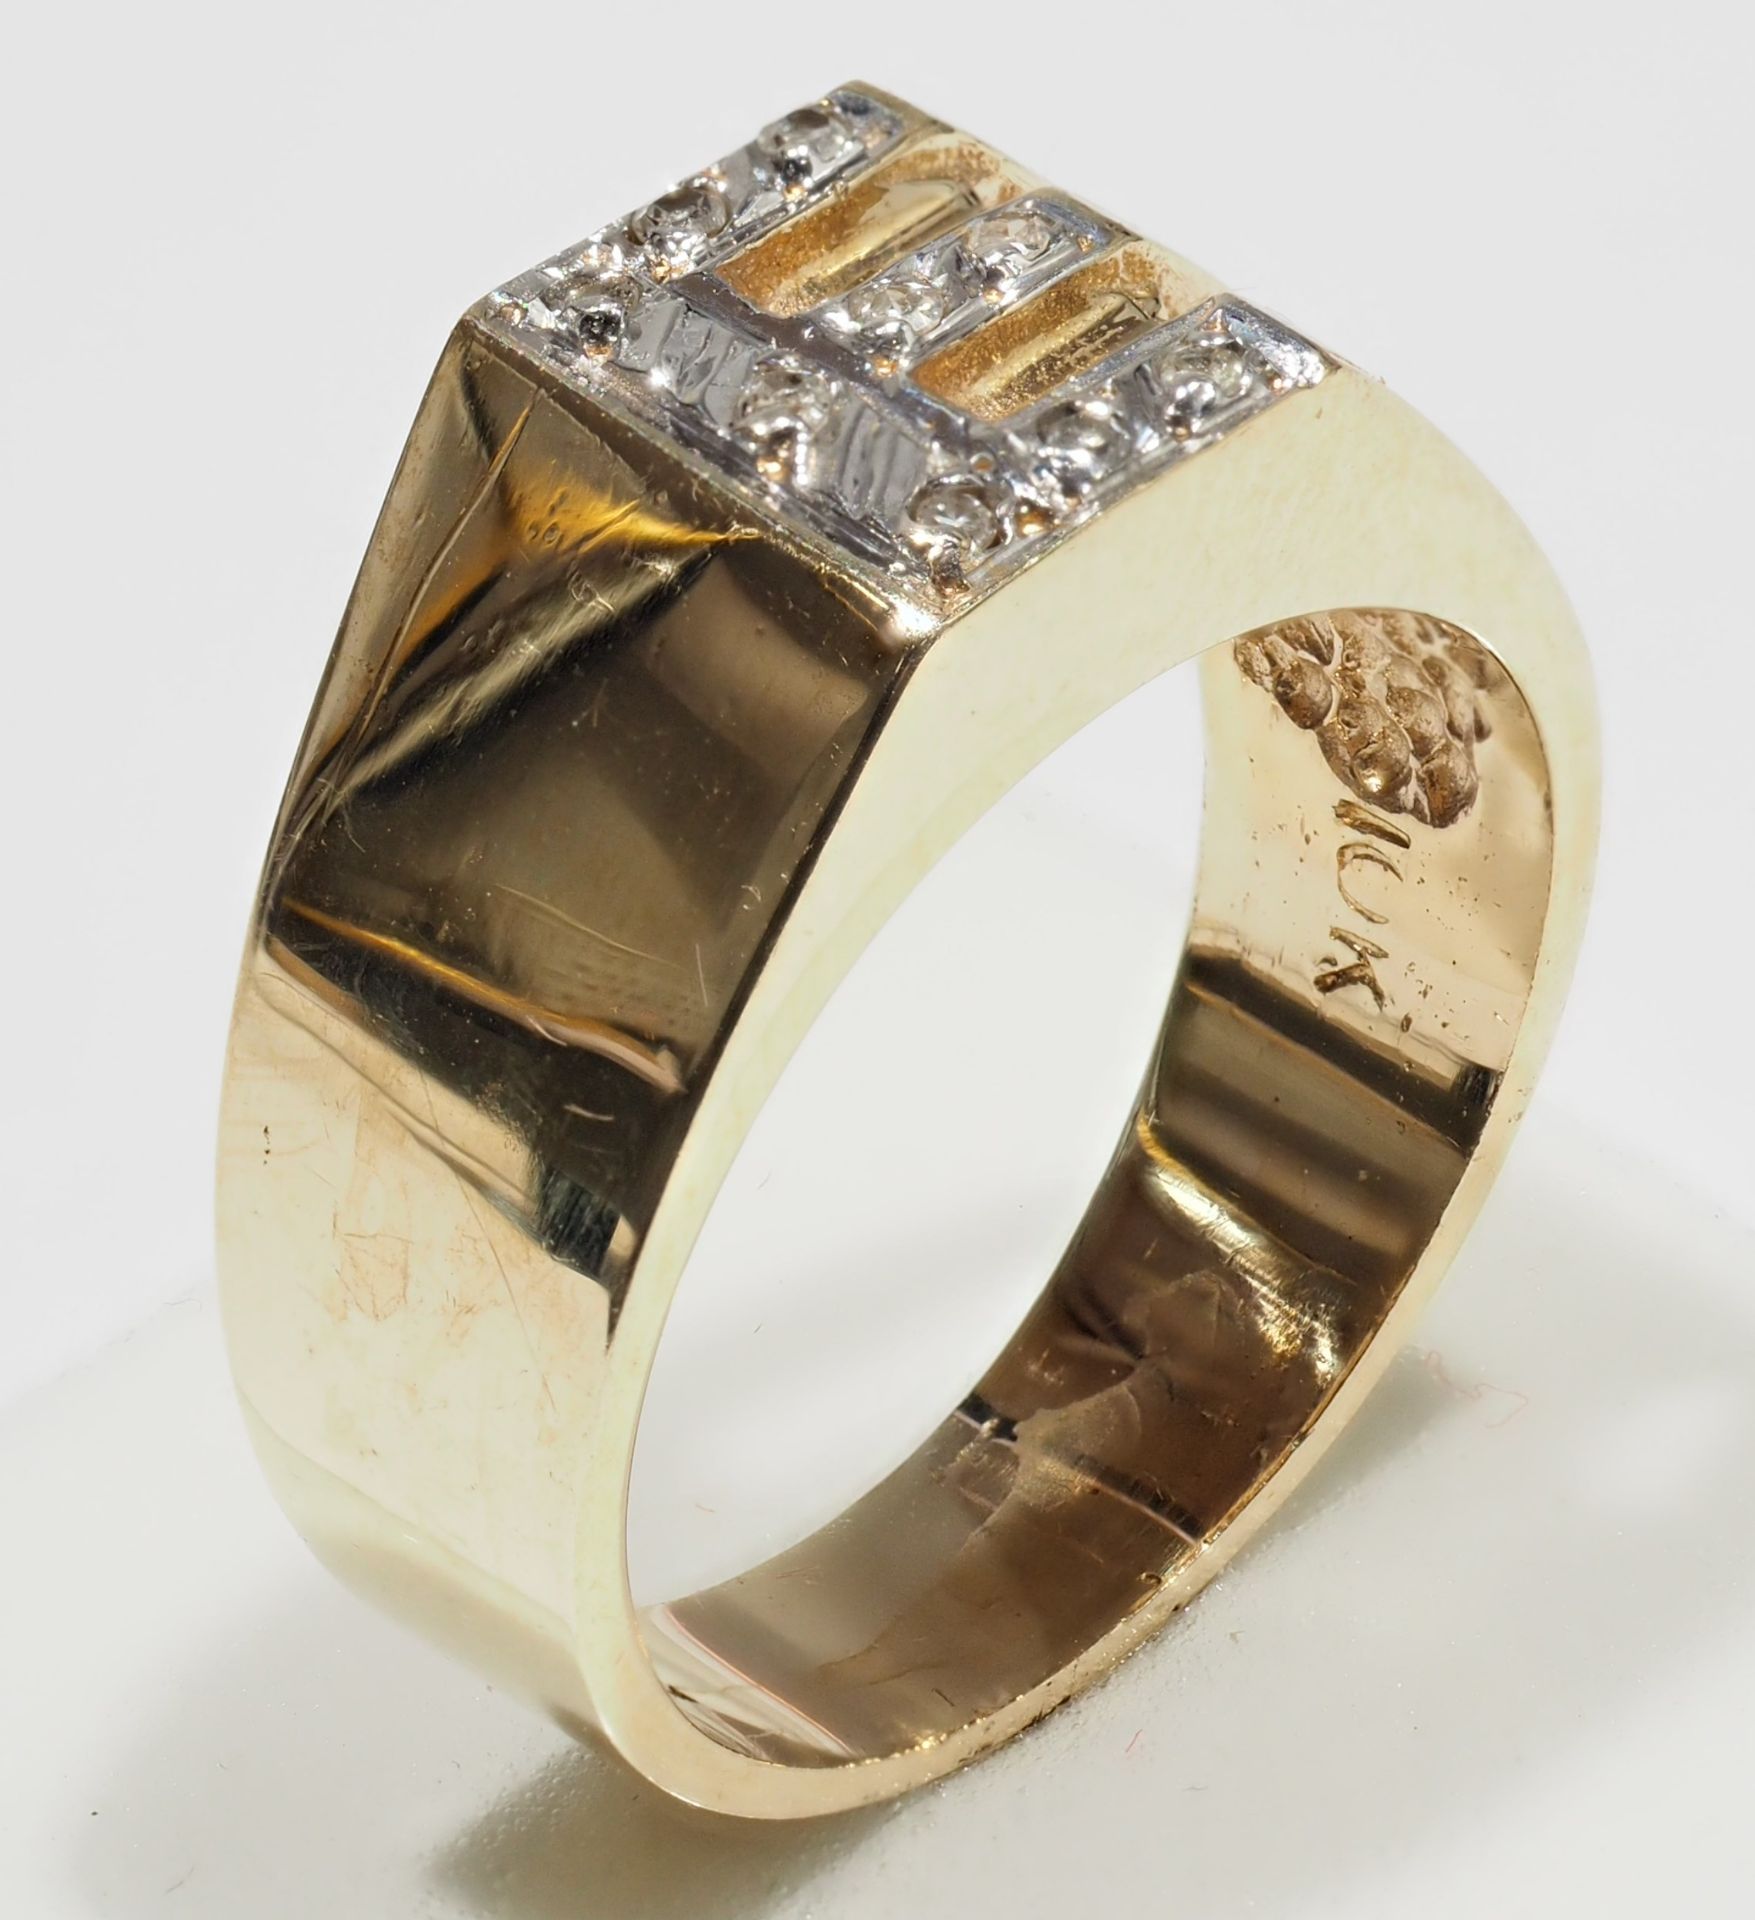 14K Yellow Gold 9 Diamond Initial 'E' Ring (App. 4.9g) w/ New Gift Box, Insurance Value $850 - Image 2 of 3